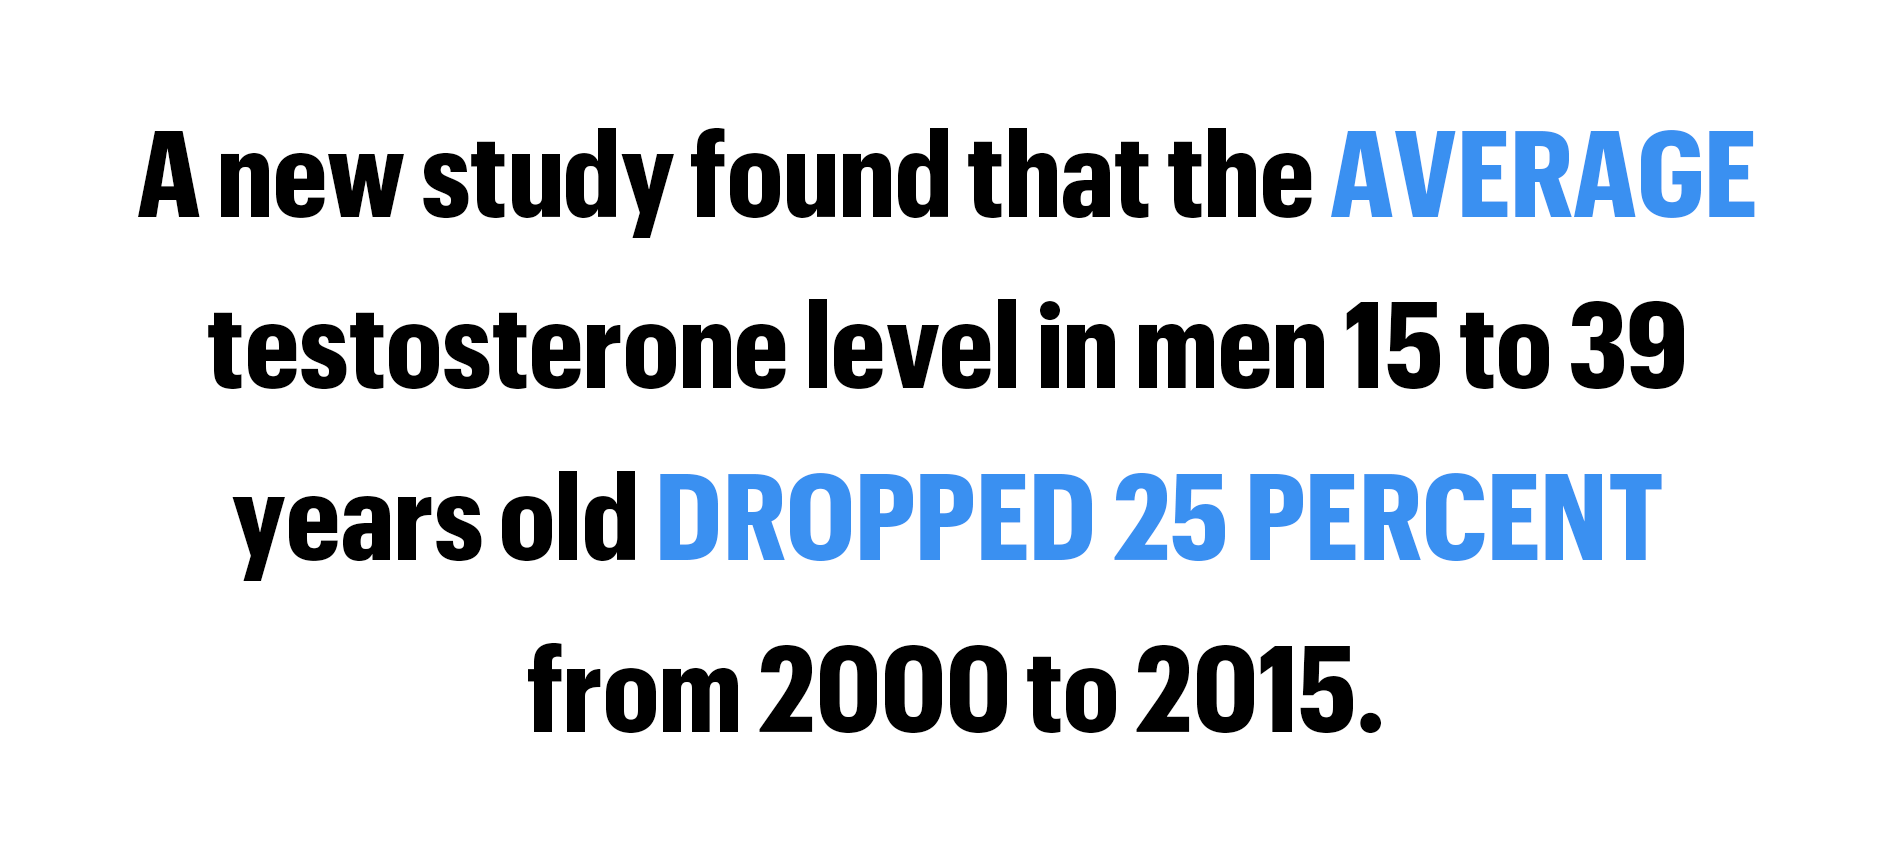 Rethinking testosterone, the scientific case that undermines male power